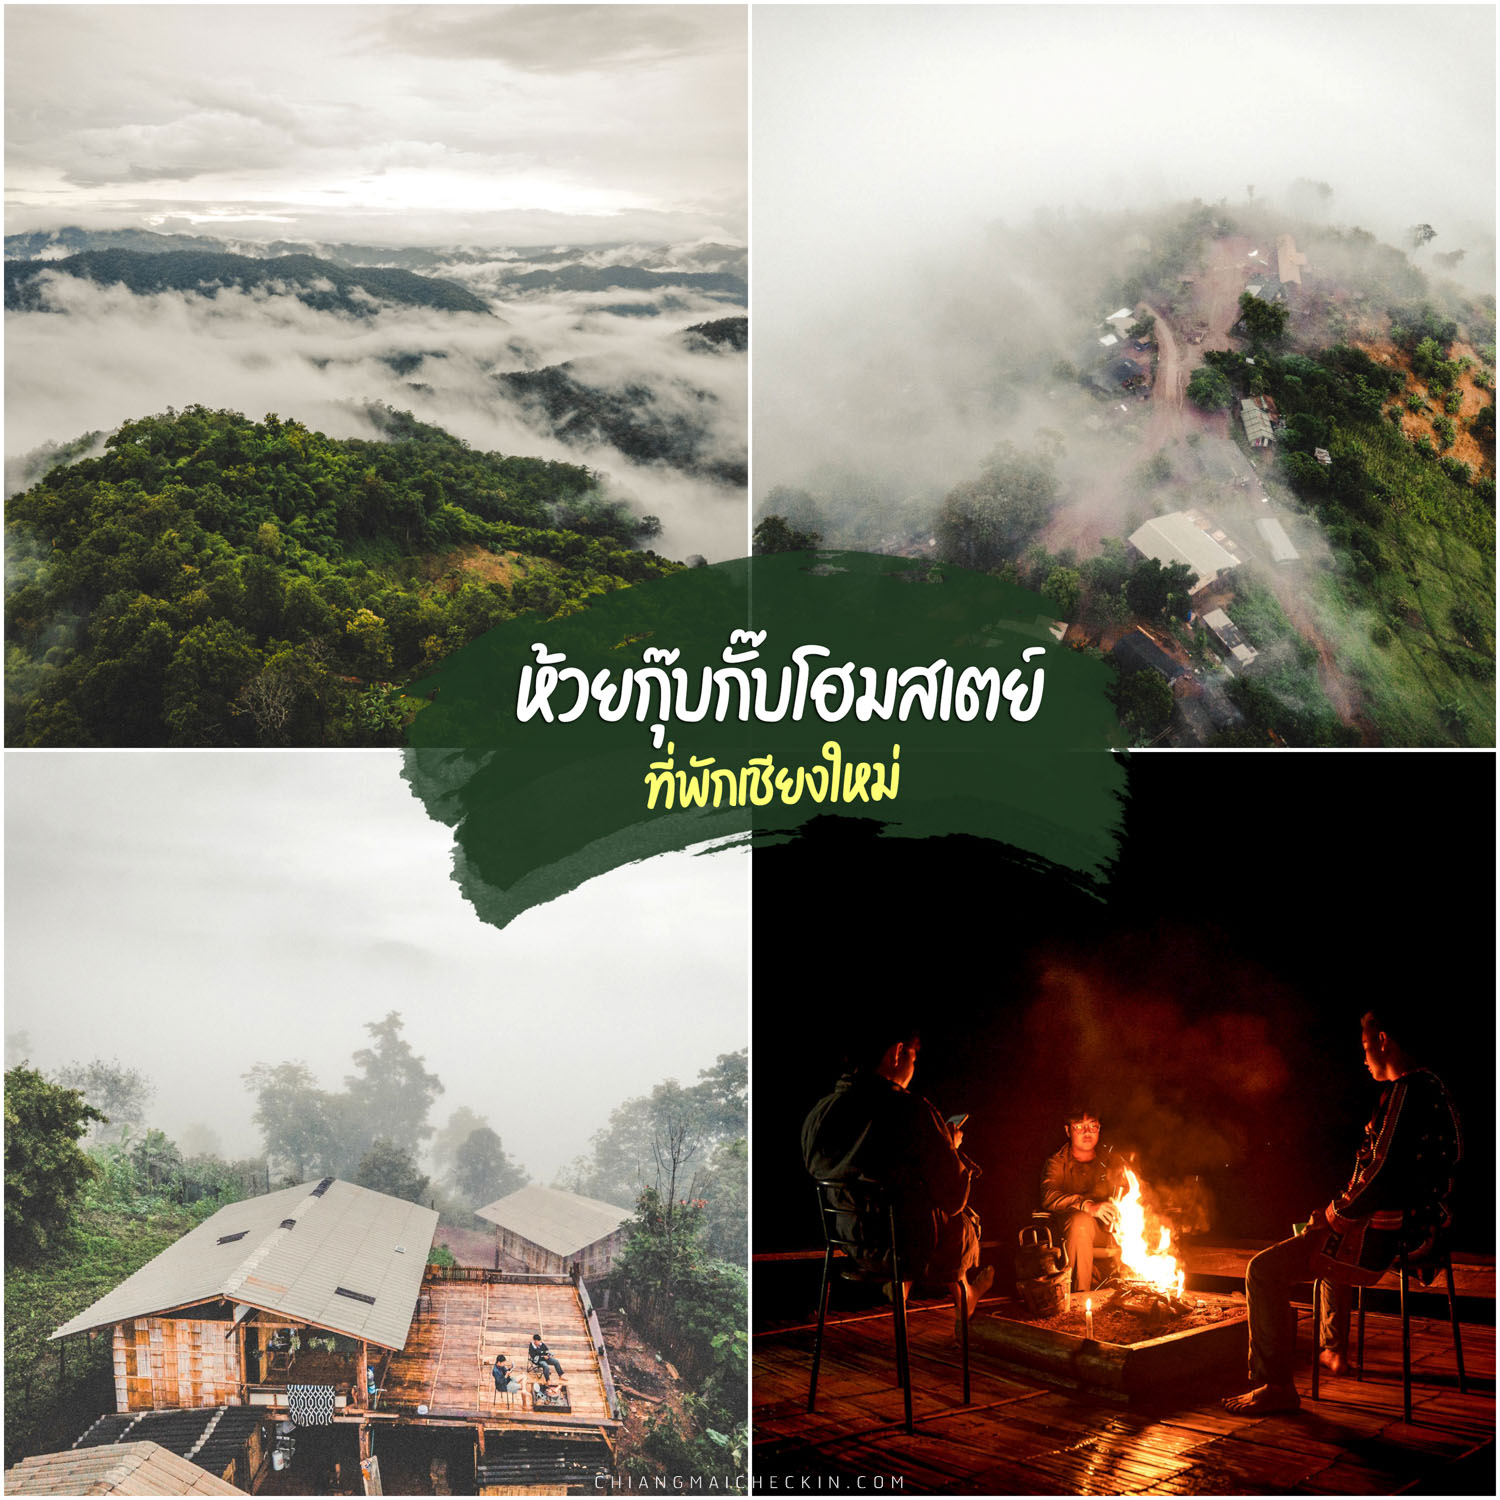 Huai Kup Kab Homestay，湄登，清迈的住宿，睡觉看星星，被雾海和群山包围的民宿，极其美丽。